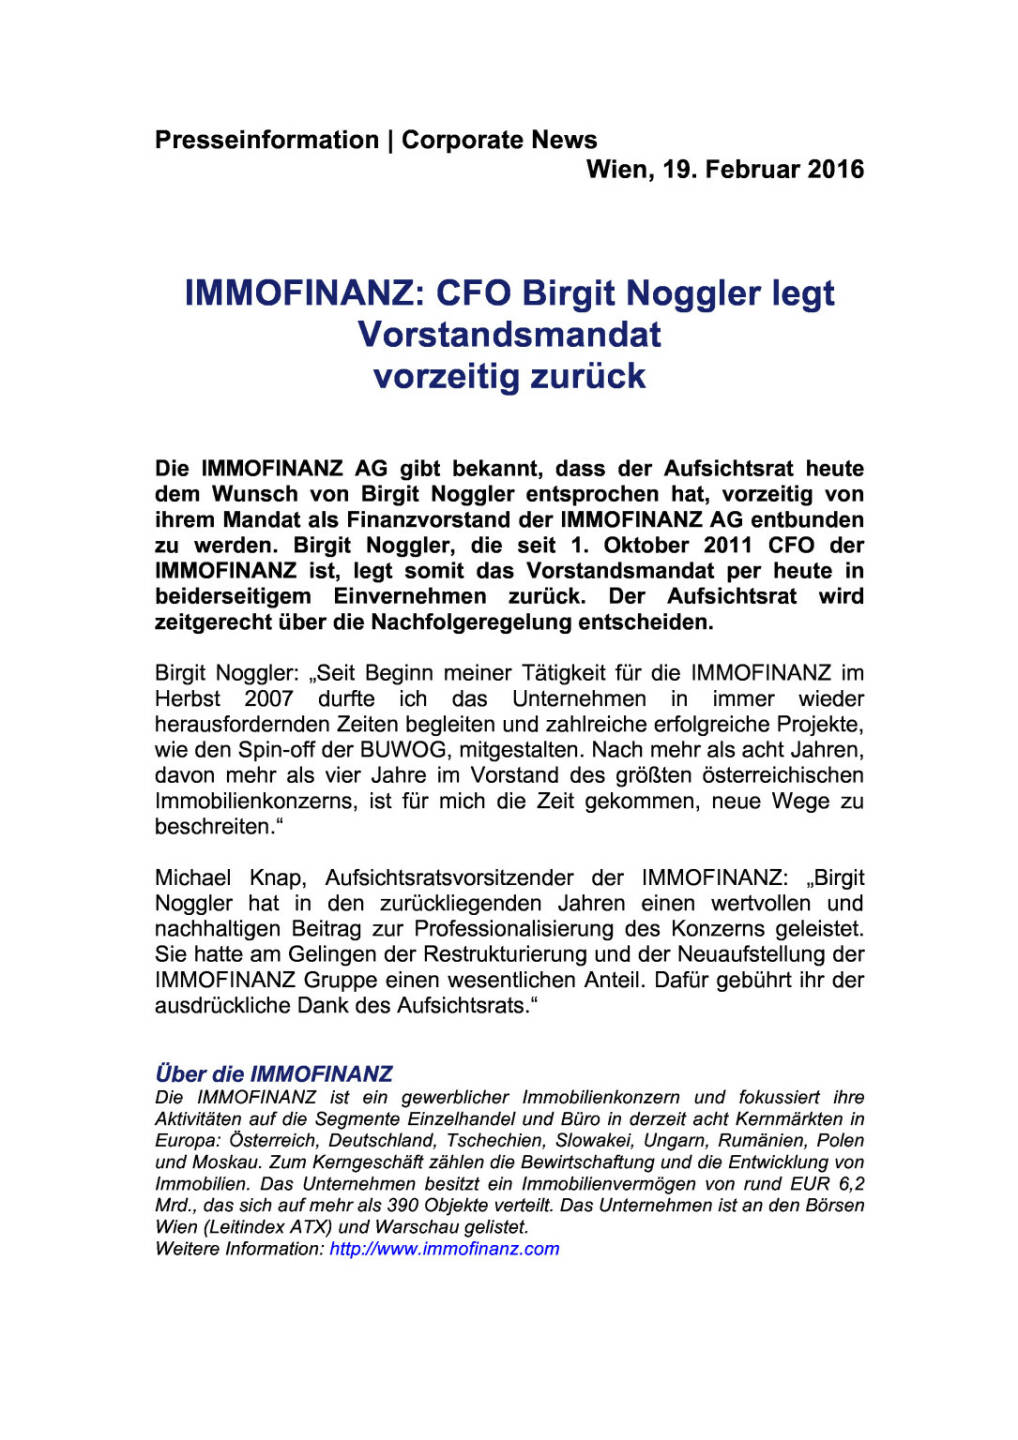 Immofinanz: Birgit Noggler legt Vorstandsmandat zurück, Seite 1/2, komplettes Dokument unter http://boerse-social.com/static/uploads/file_660_immofinanz_birgit_noggler_legt_vorstandsmandat_zuruck.pdf